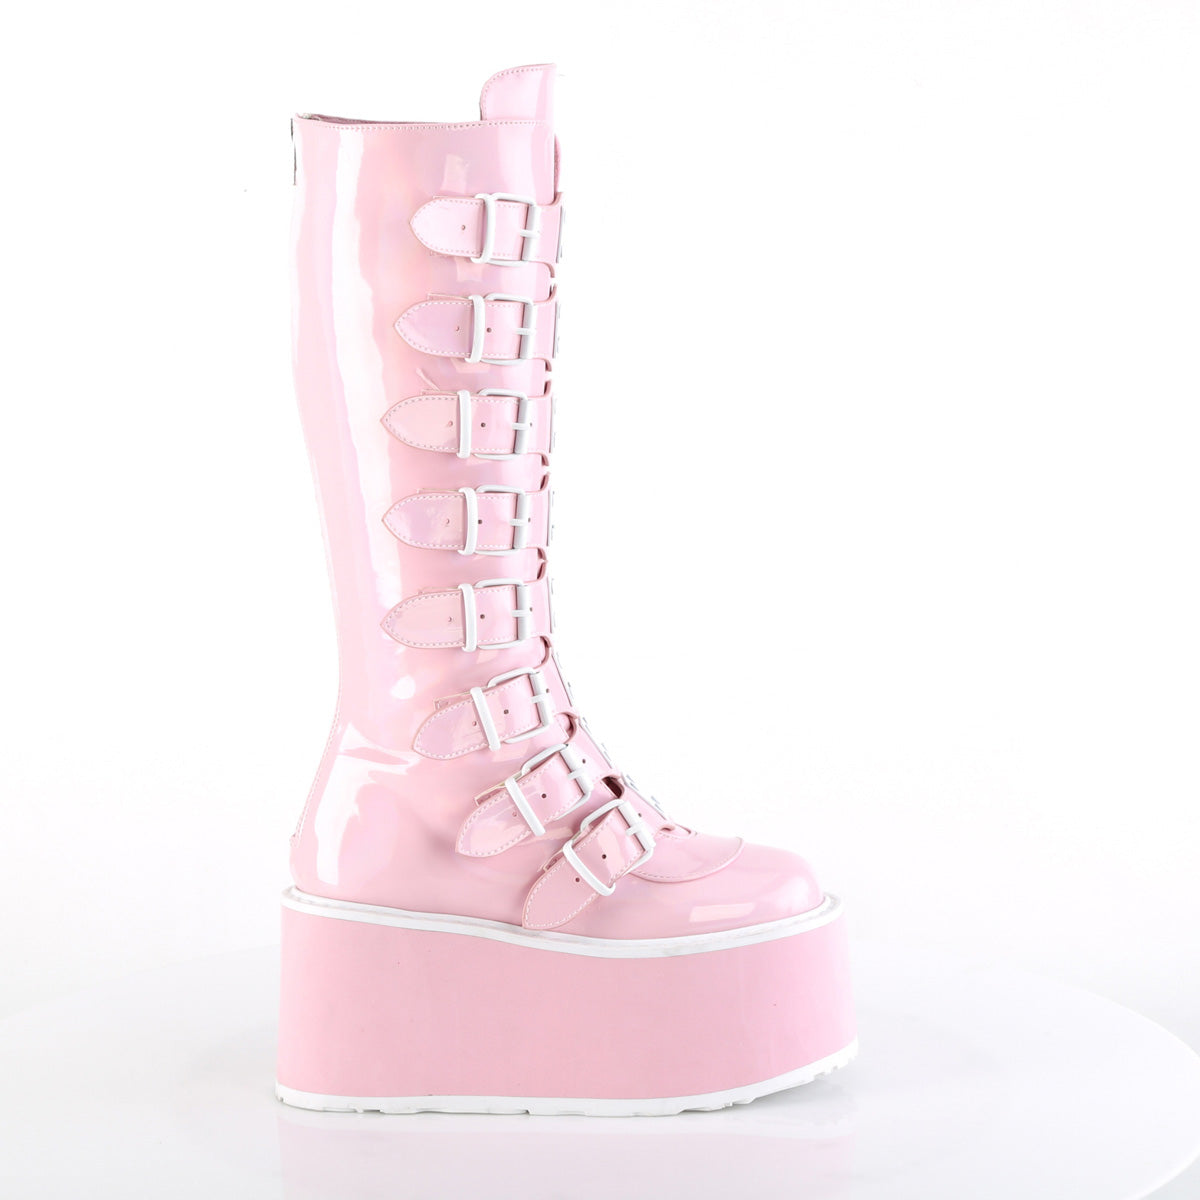 DAMNED-318 Demonia B Pink Holo Patent Women's Mid-Calf & Knee High Boots [Demonia Cult Alternative Footwear]